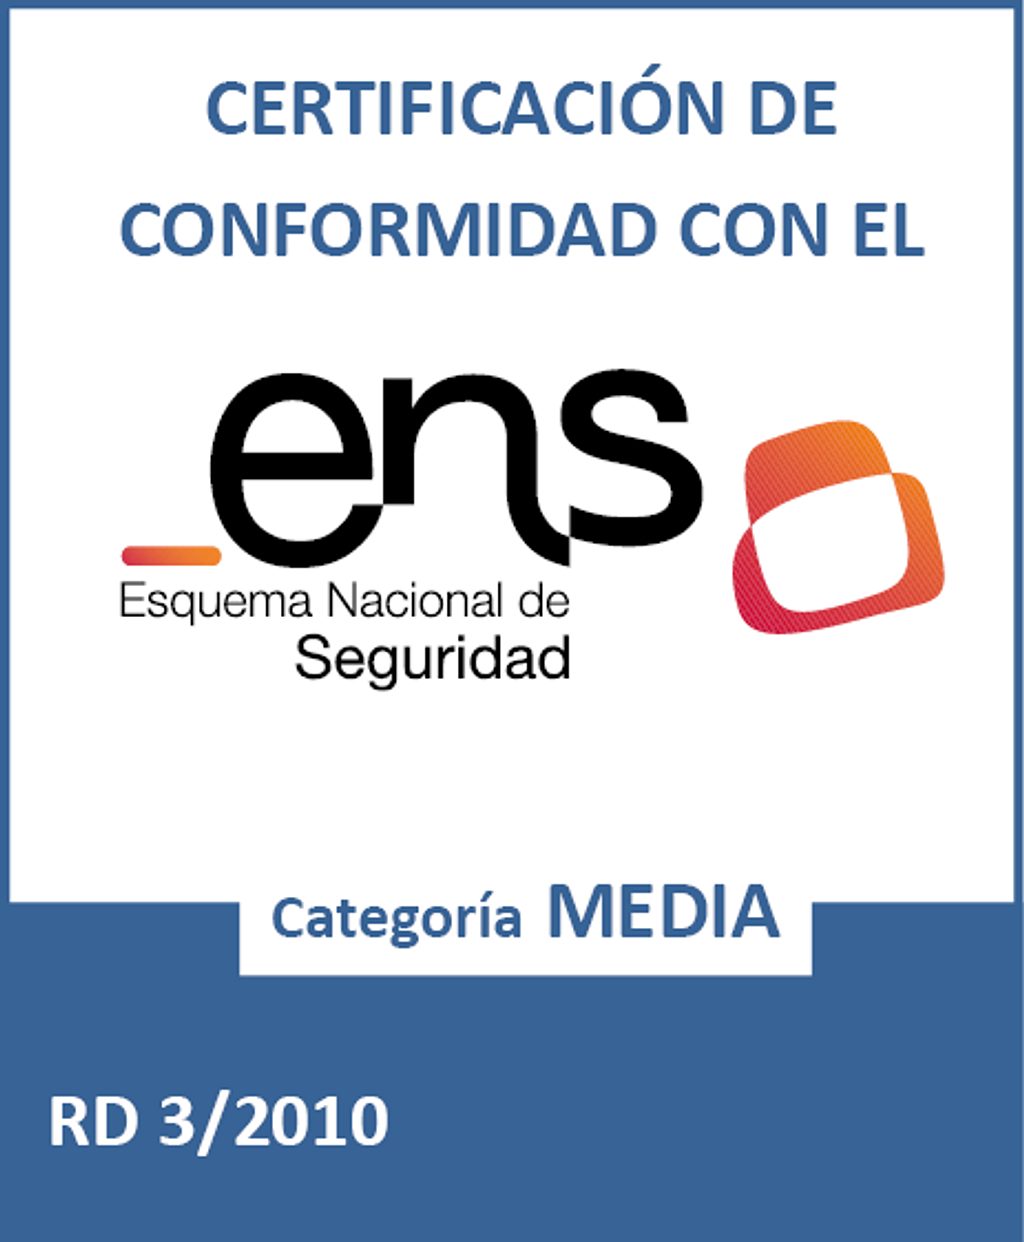 Signicat Spain is NSC (ENS) certified